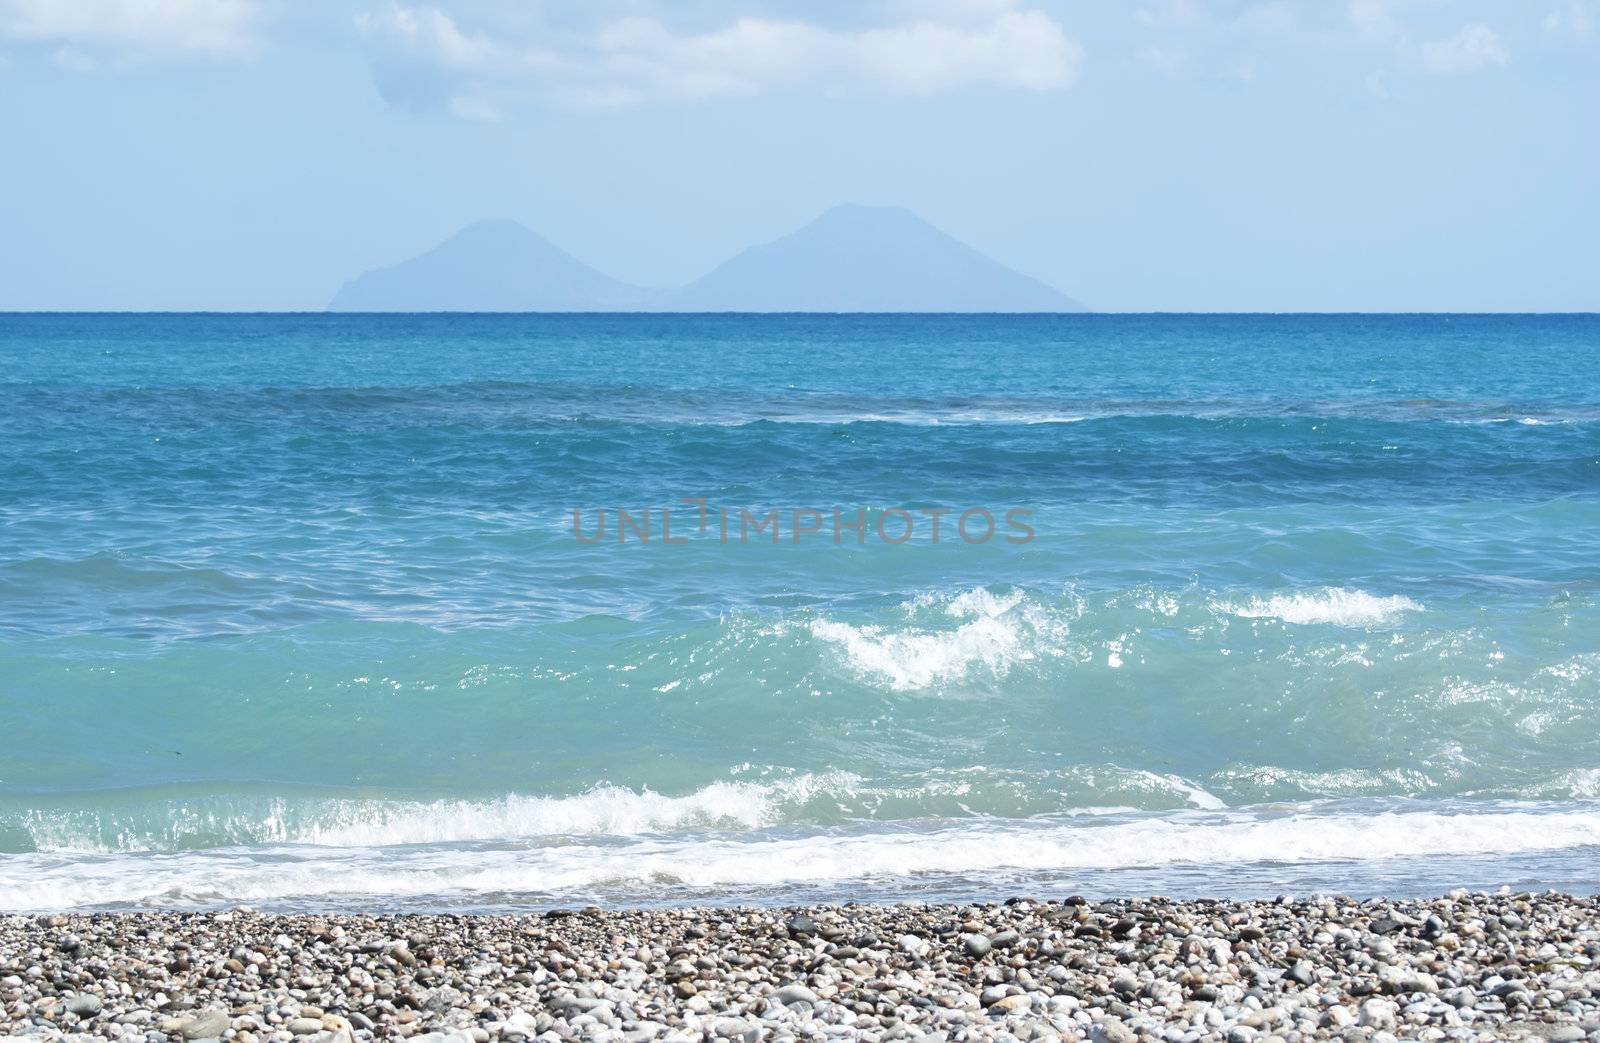 Brolo beach, Messina, Sicily by gandolfocannatella